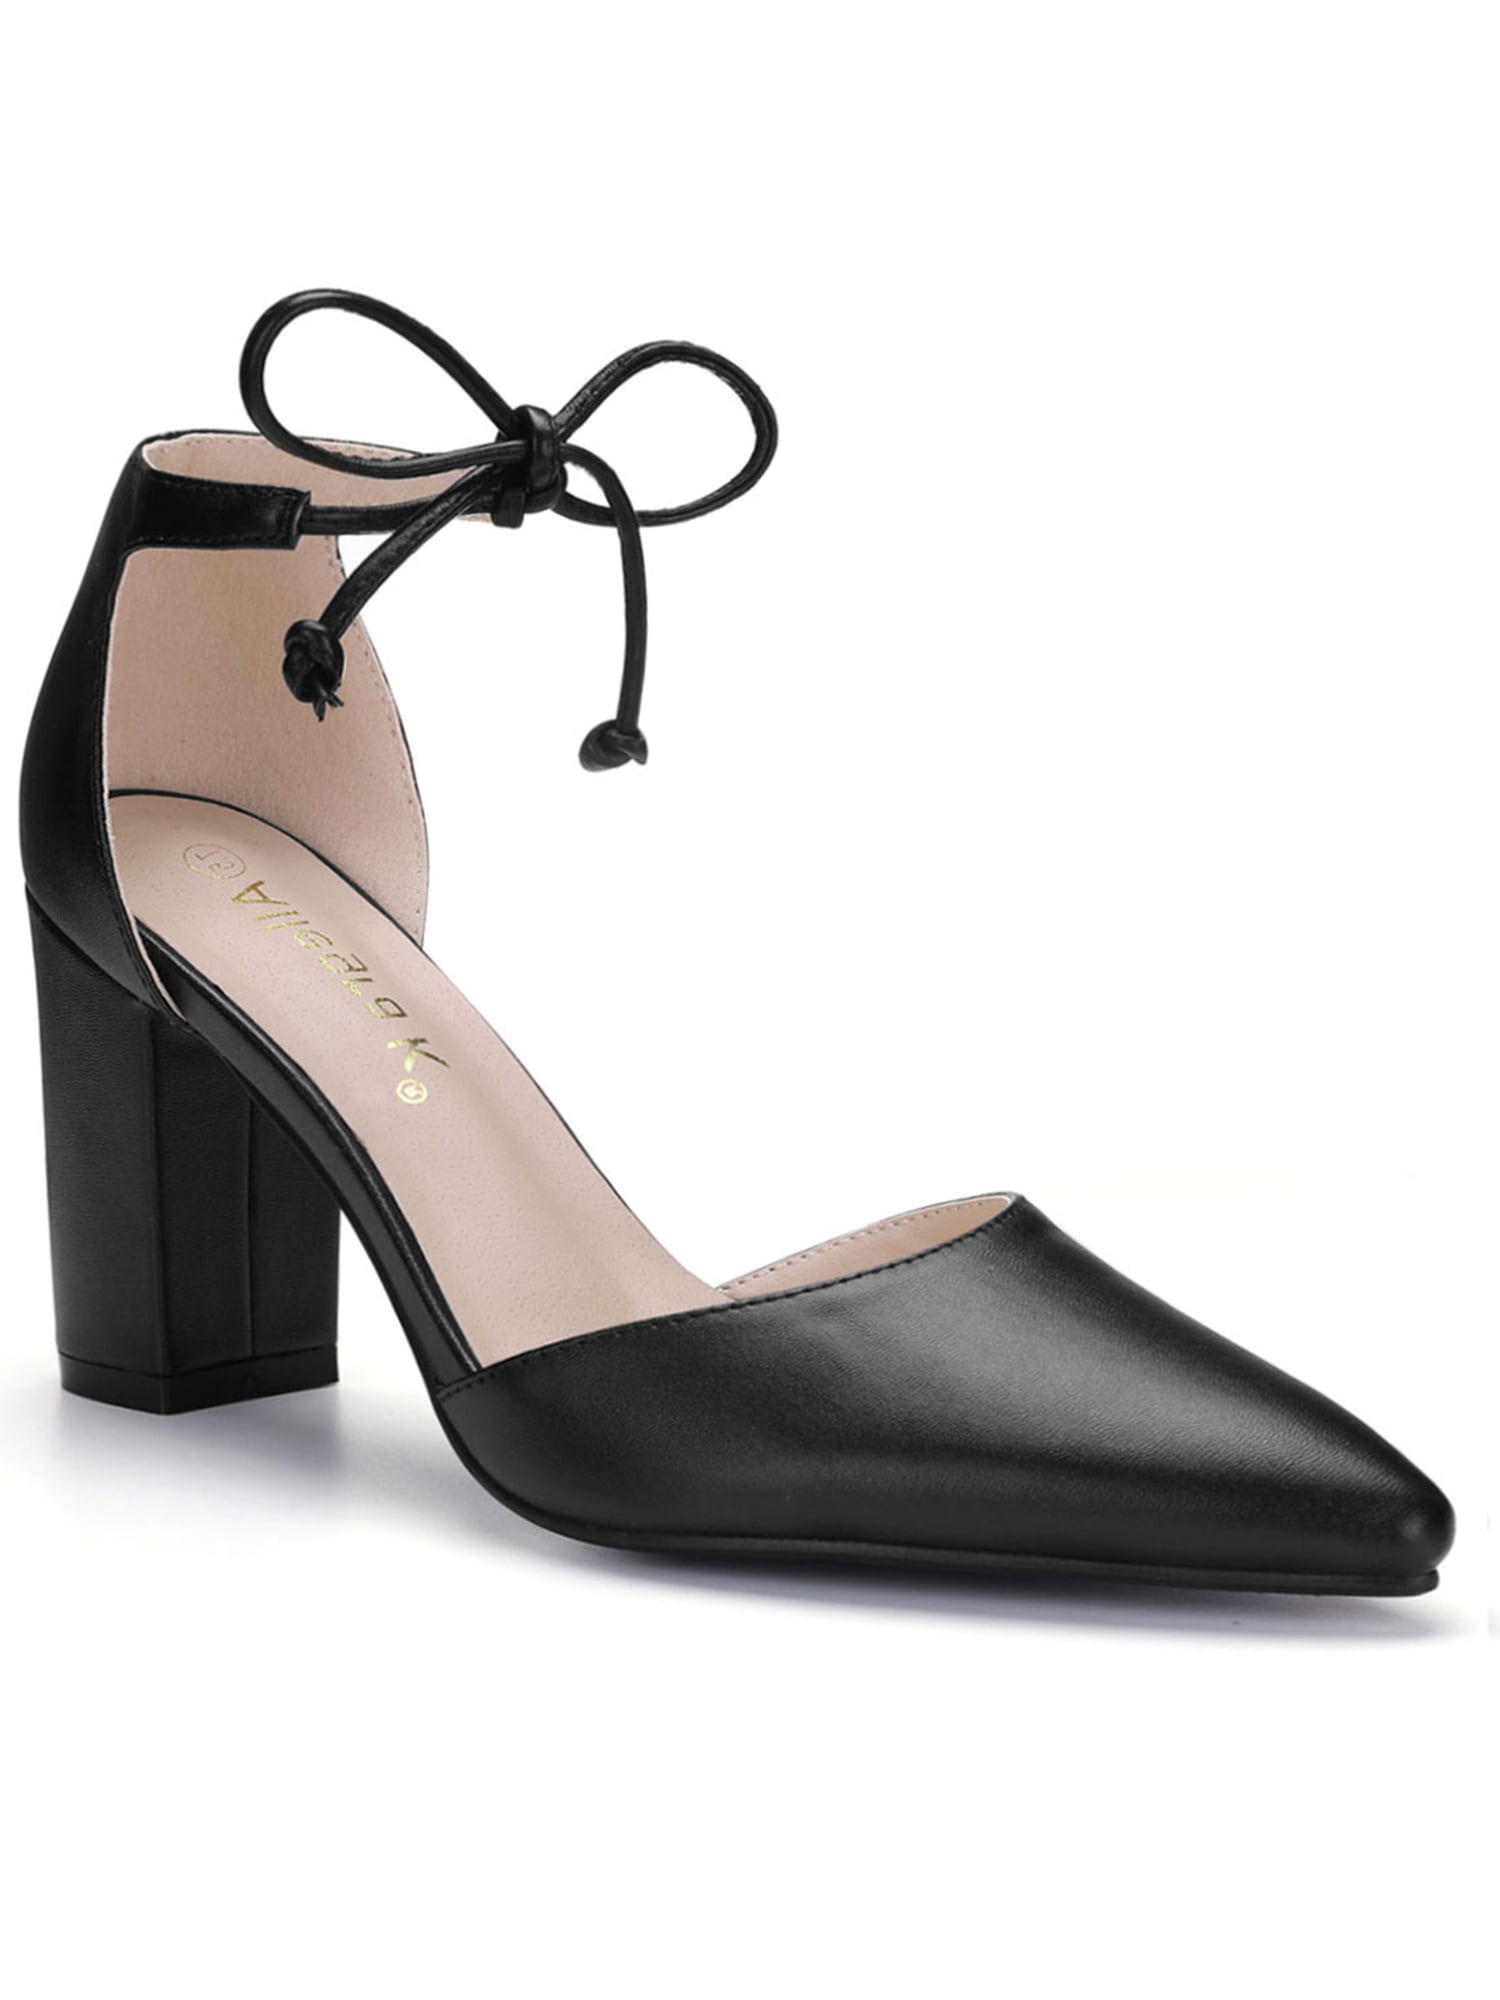 Details about   Womens Ladies Fashion Retro Velvet Bow Tie Mid Heel Ankle Strap Court Shoes 